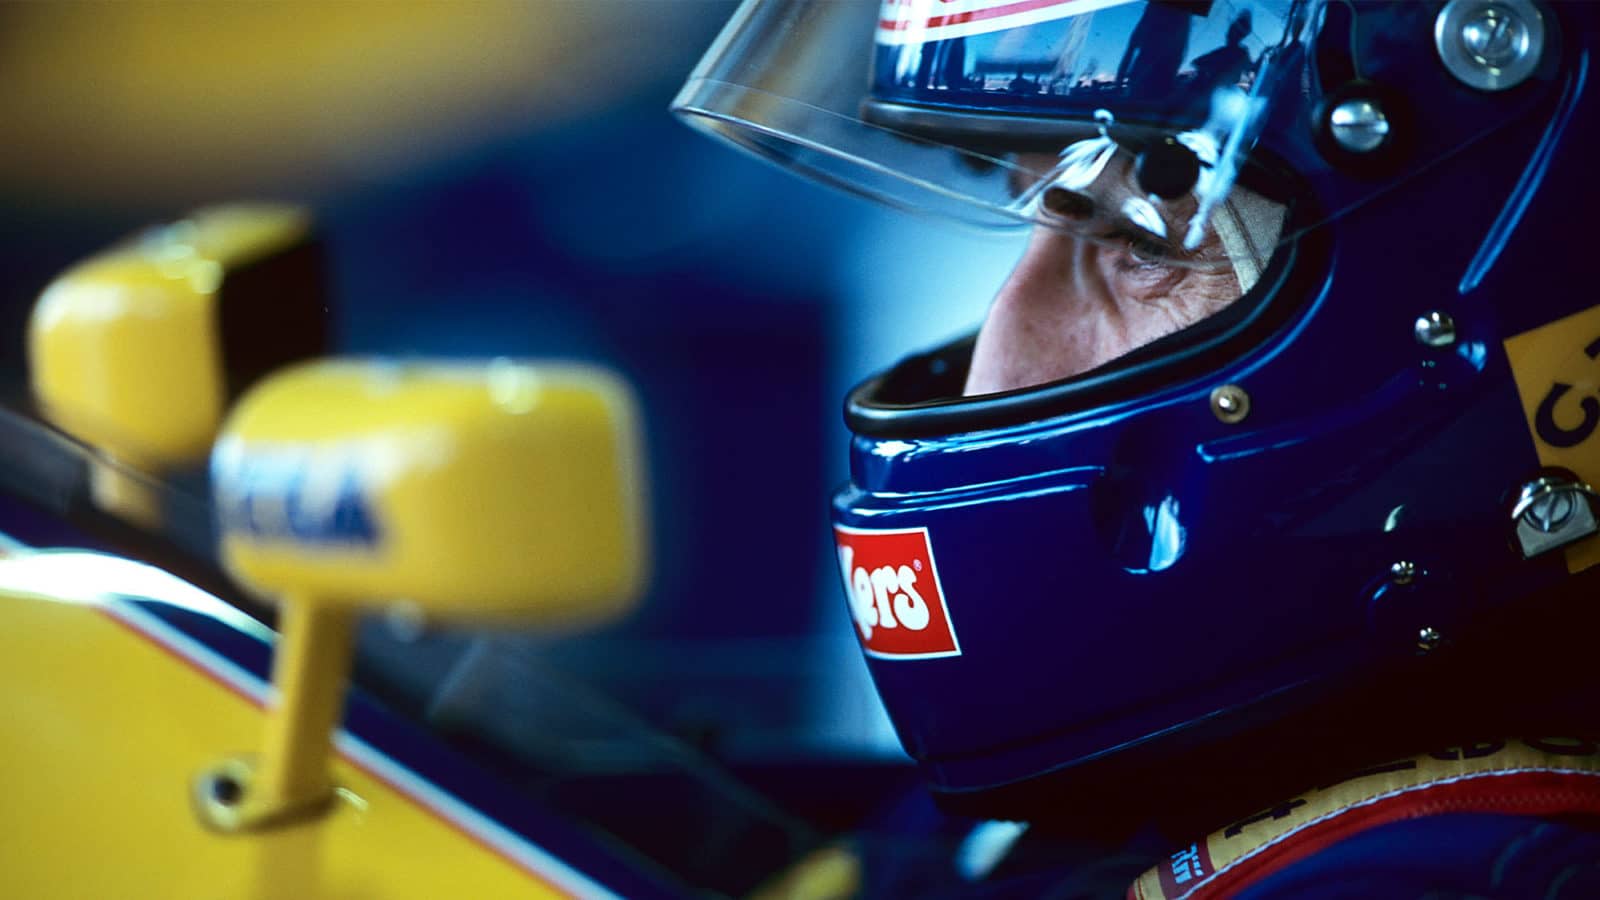 Alain Prost, Williams-Renault FW15C, Grand Prix of Brazil, Autodromo Jose Carlos Pace, March 28, 1993. (Photo by Paul-Henri Cahier/Getty Images)